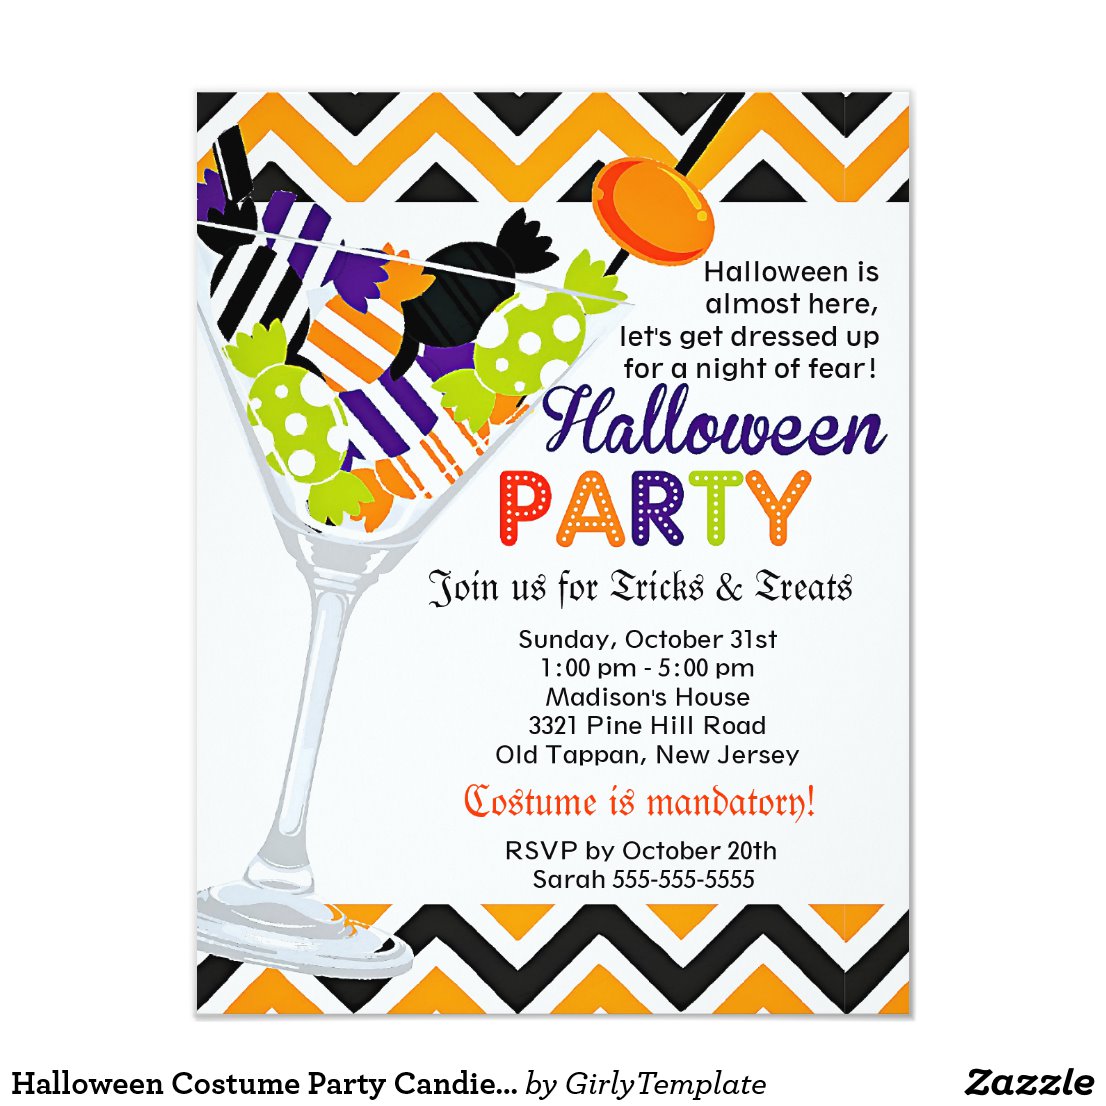 Fun Halloween Party Invitations